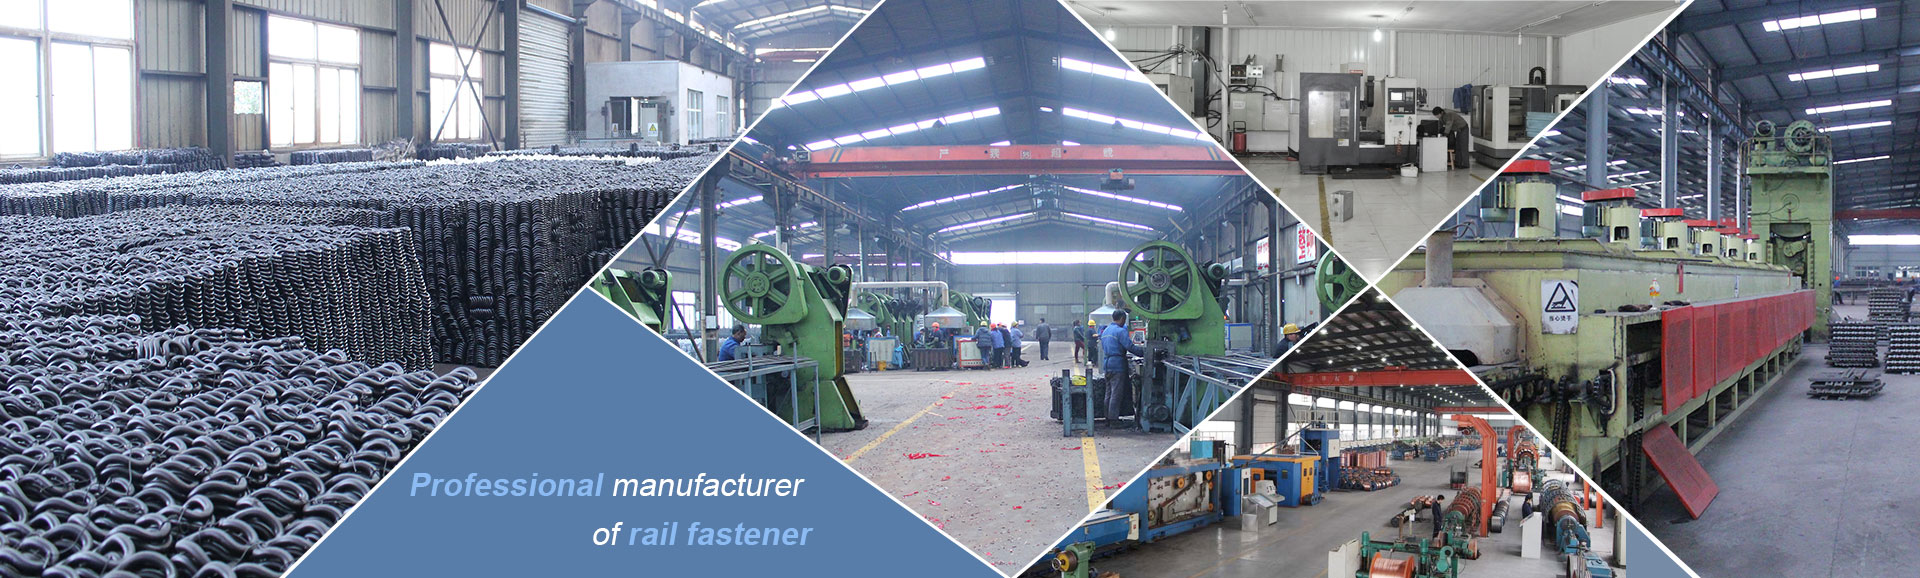 Professional rail fastener manufacture